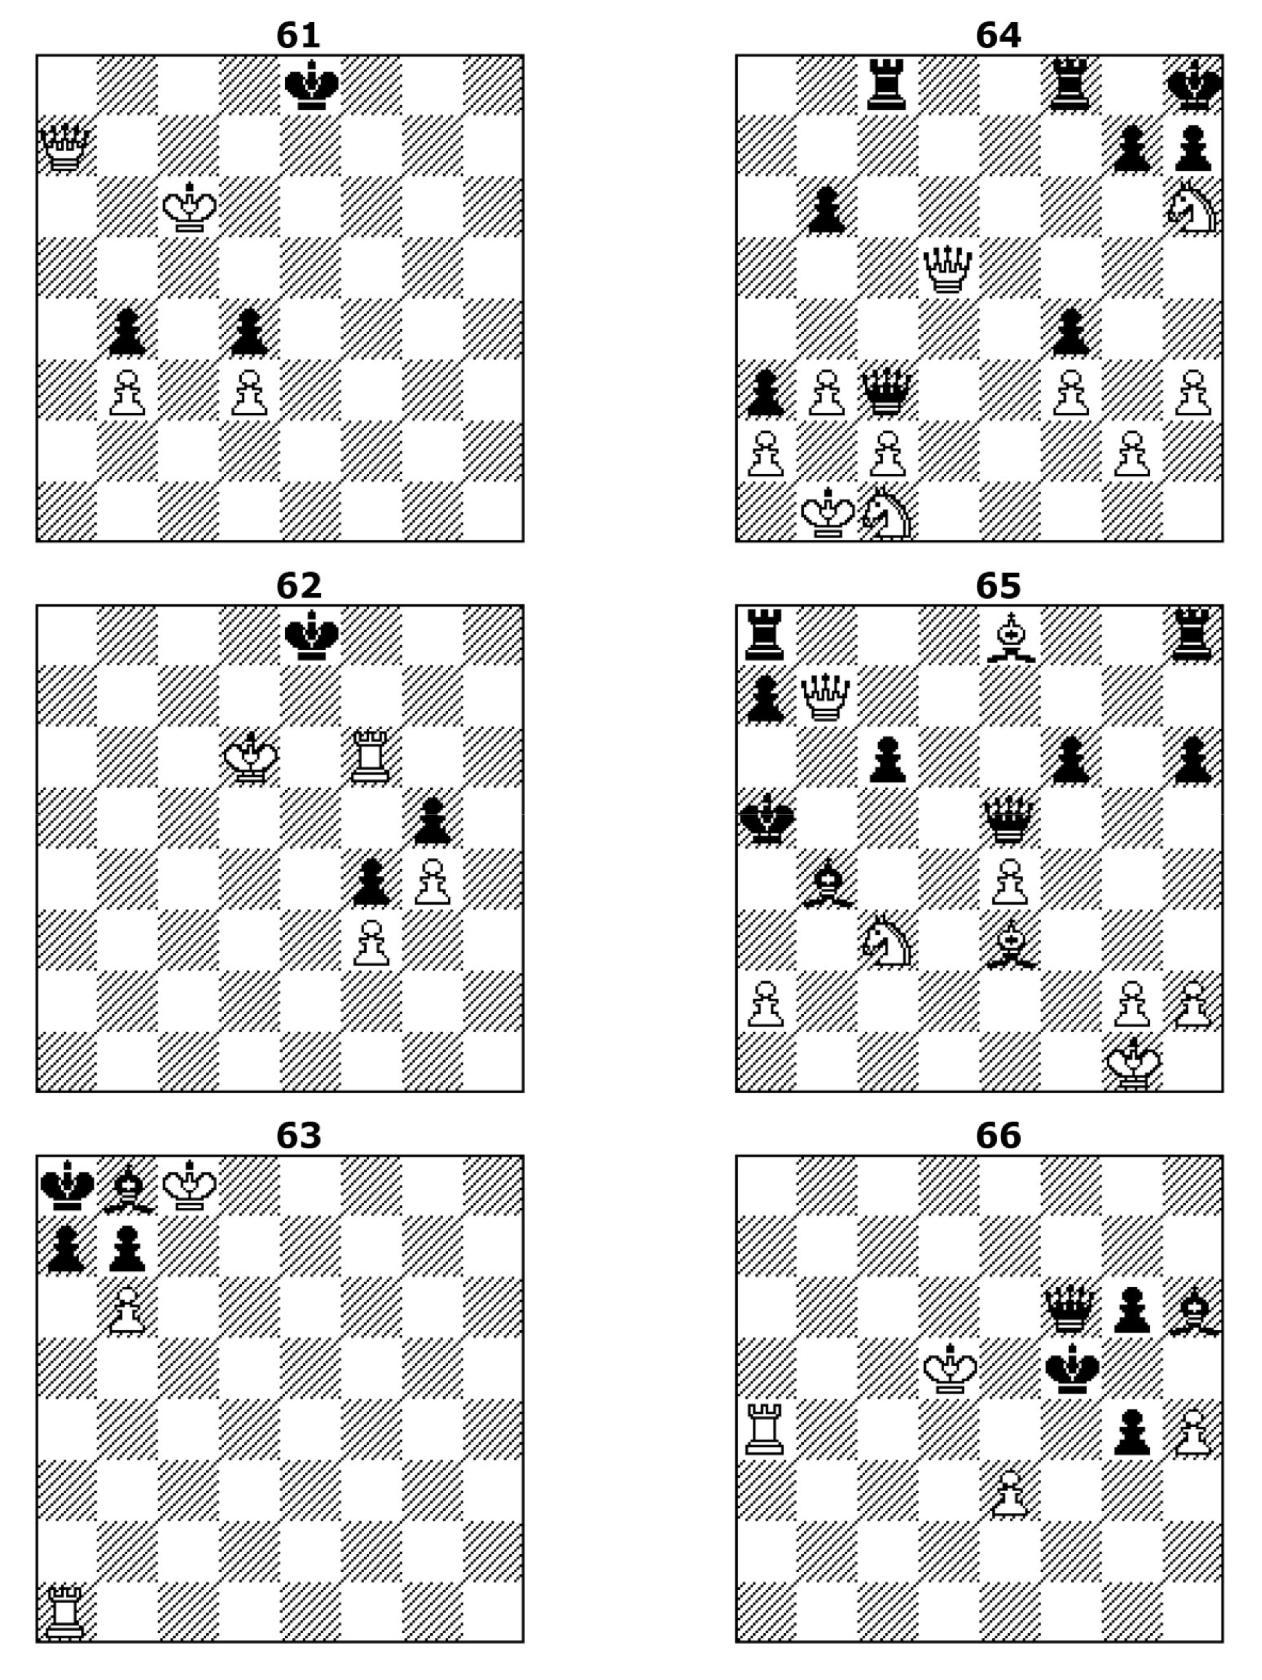 Шахматный практикум 1 мат в 1 ход матует ферзь